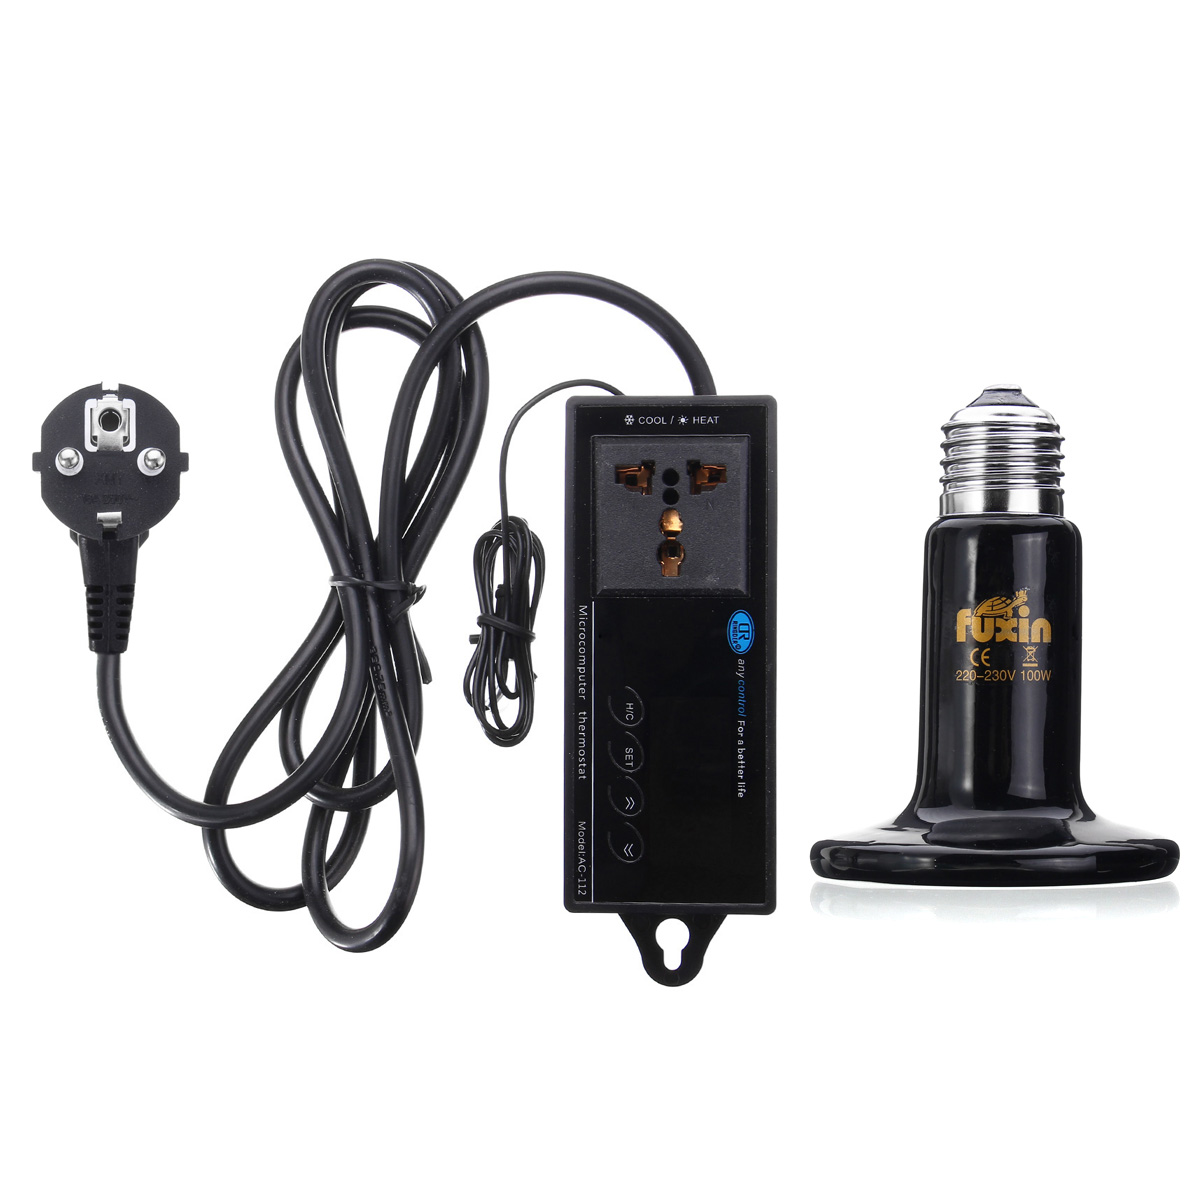 E27-Digital-Reptile-Thermostat-Heating-Control-with-220V-75mm-Dia-Ceramic-Heat-Emitter-Lamp-Bulbs-EU-1263073-5